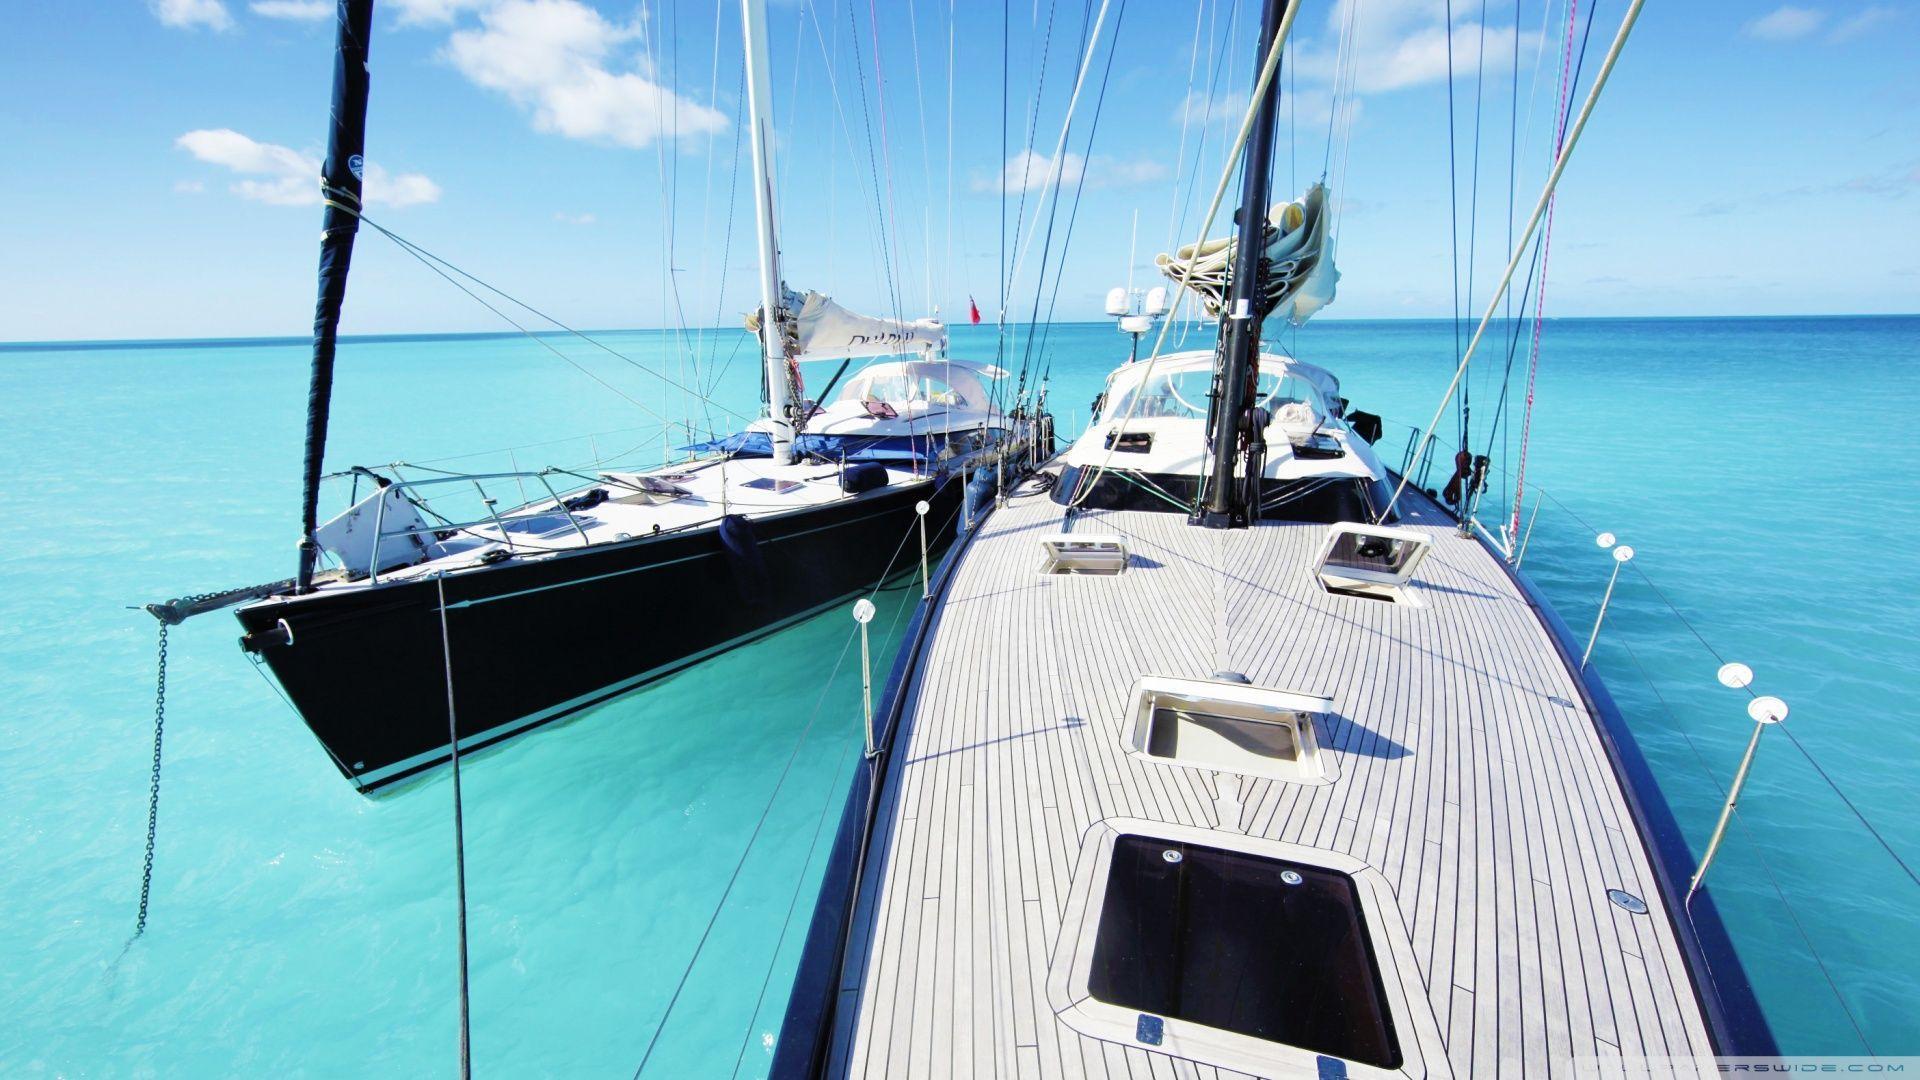 Sailing Yachts HD desktop wallpapers : Widescreen : High Definition